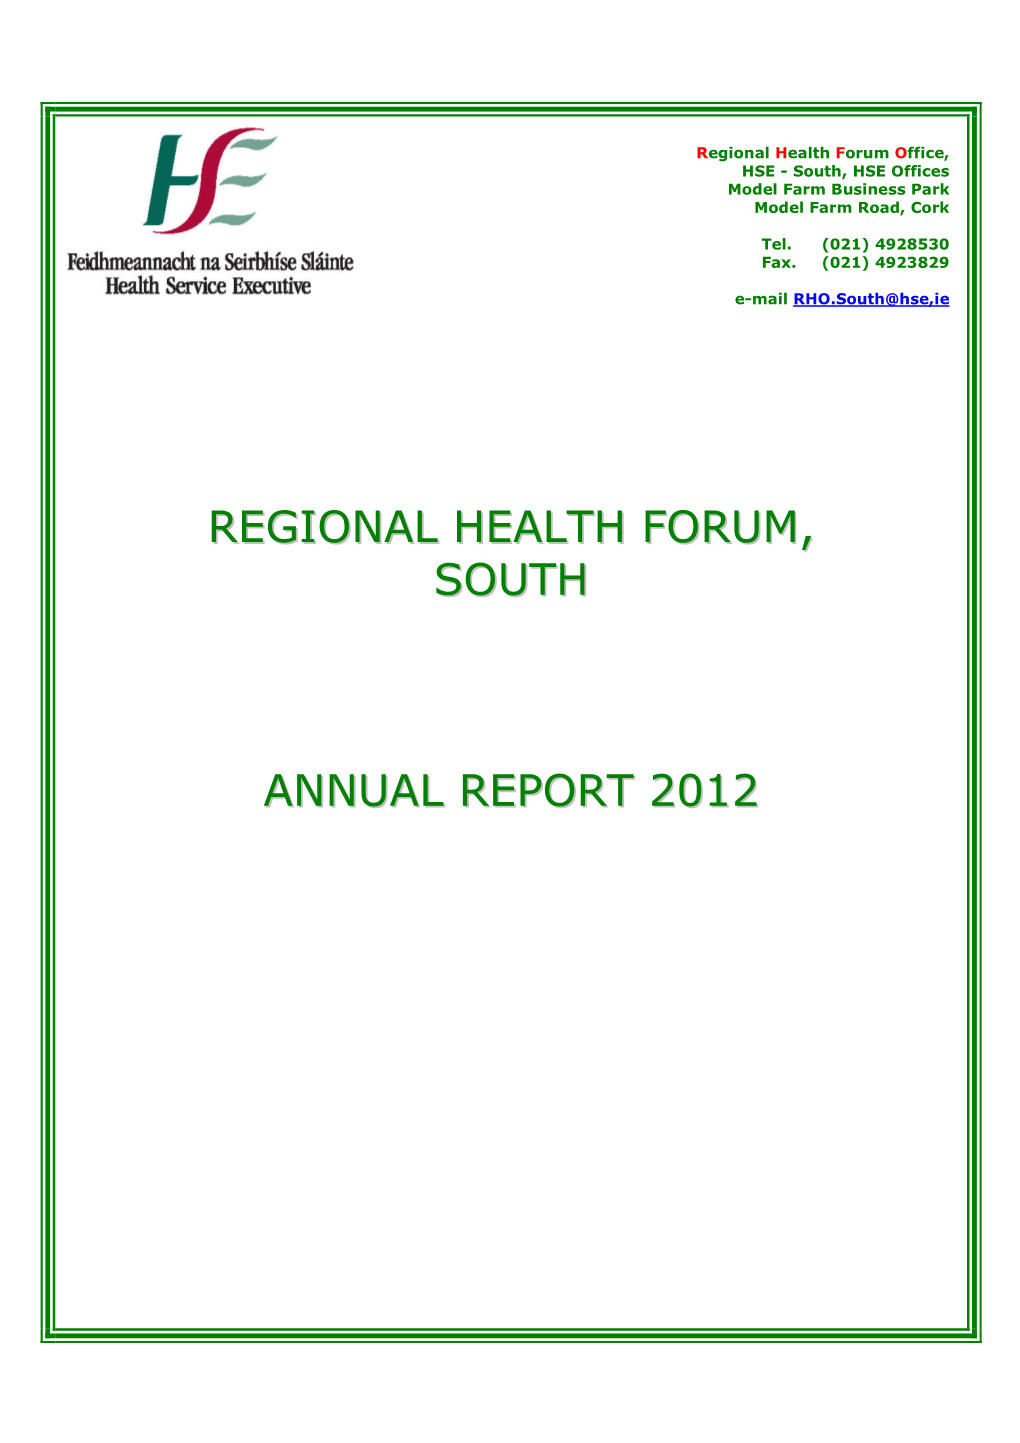 Regional Health Forum, South Annual Report 2012